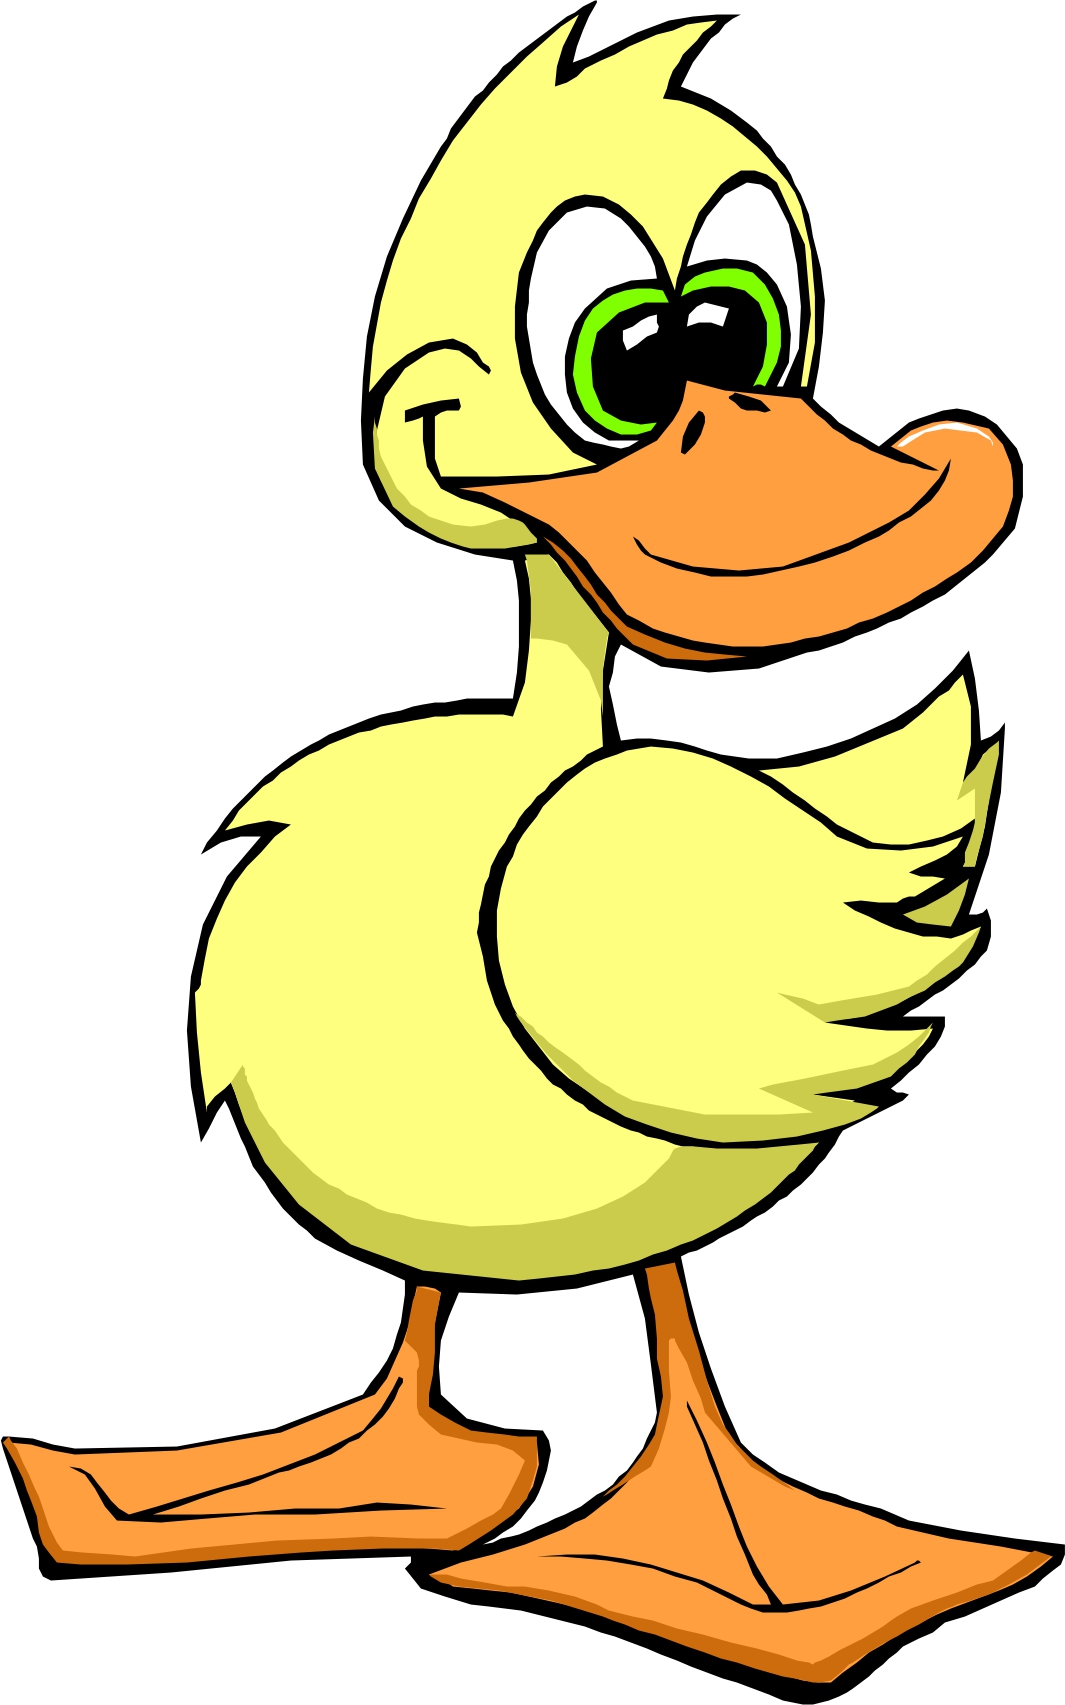 Animated Ducks - ClipArt Best